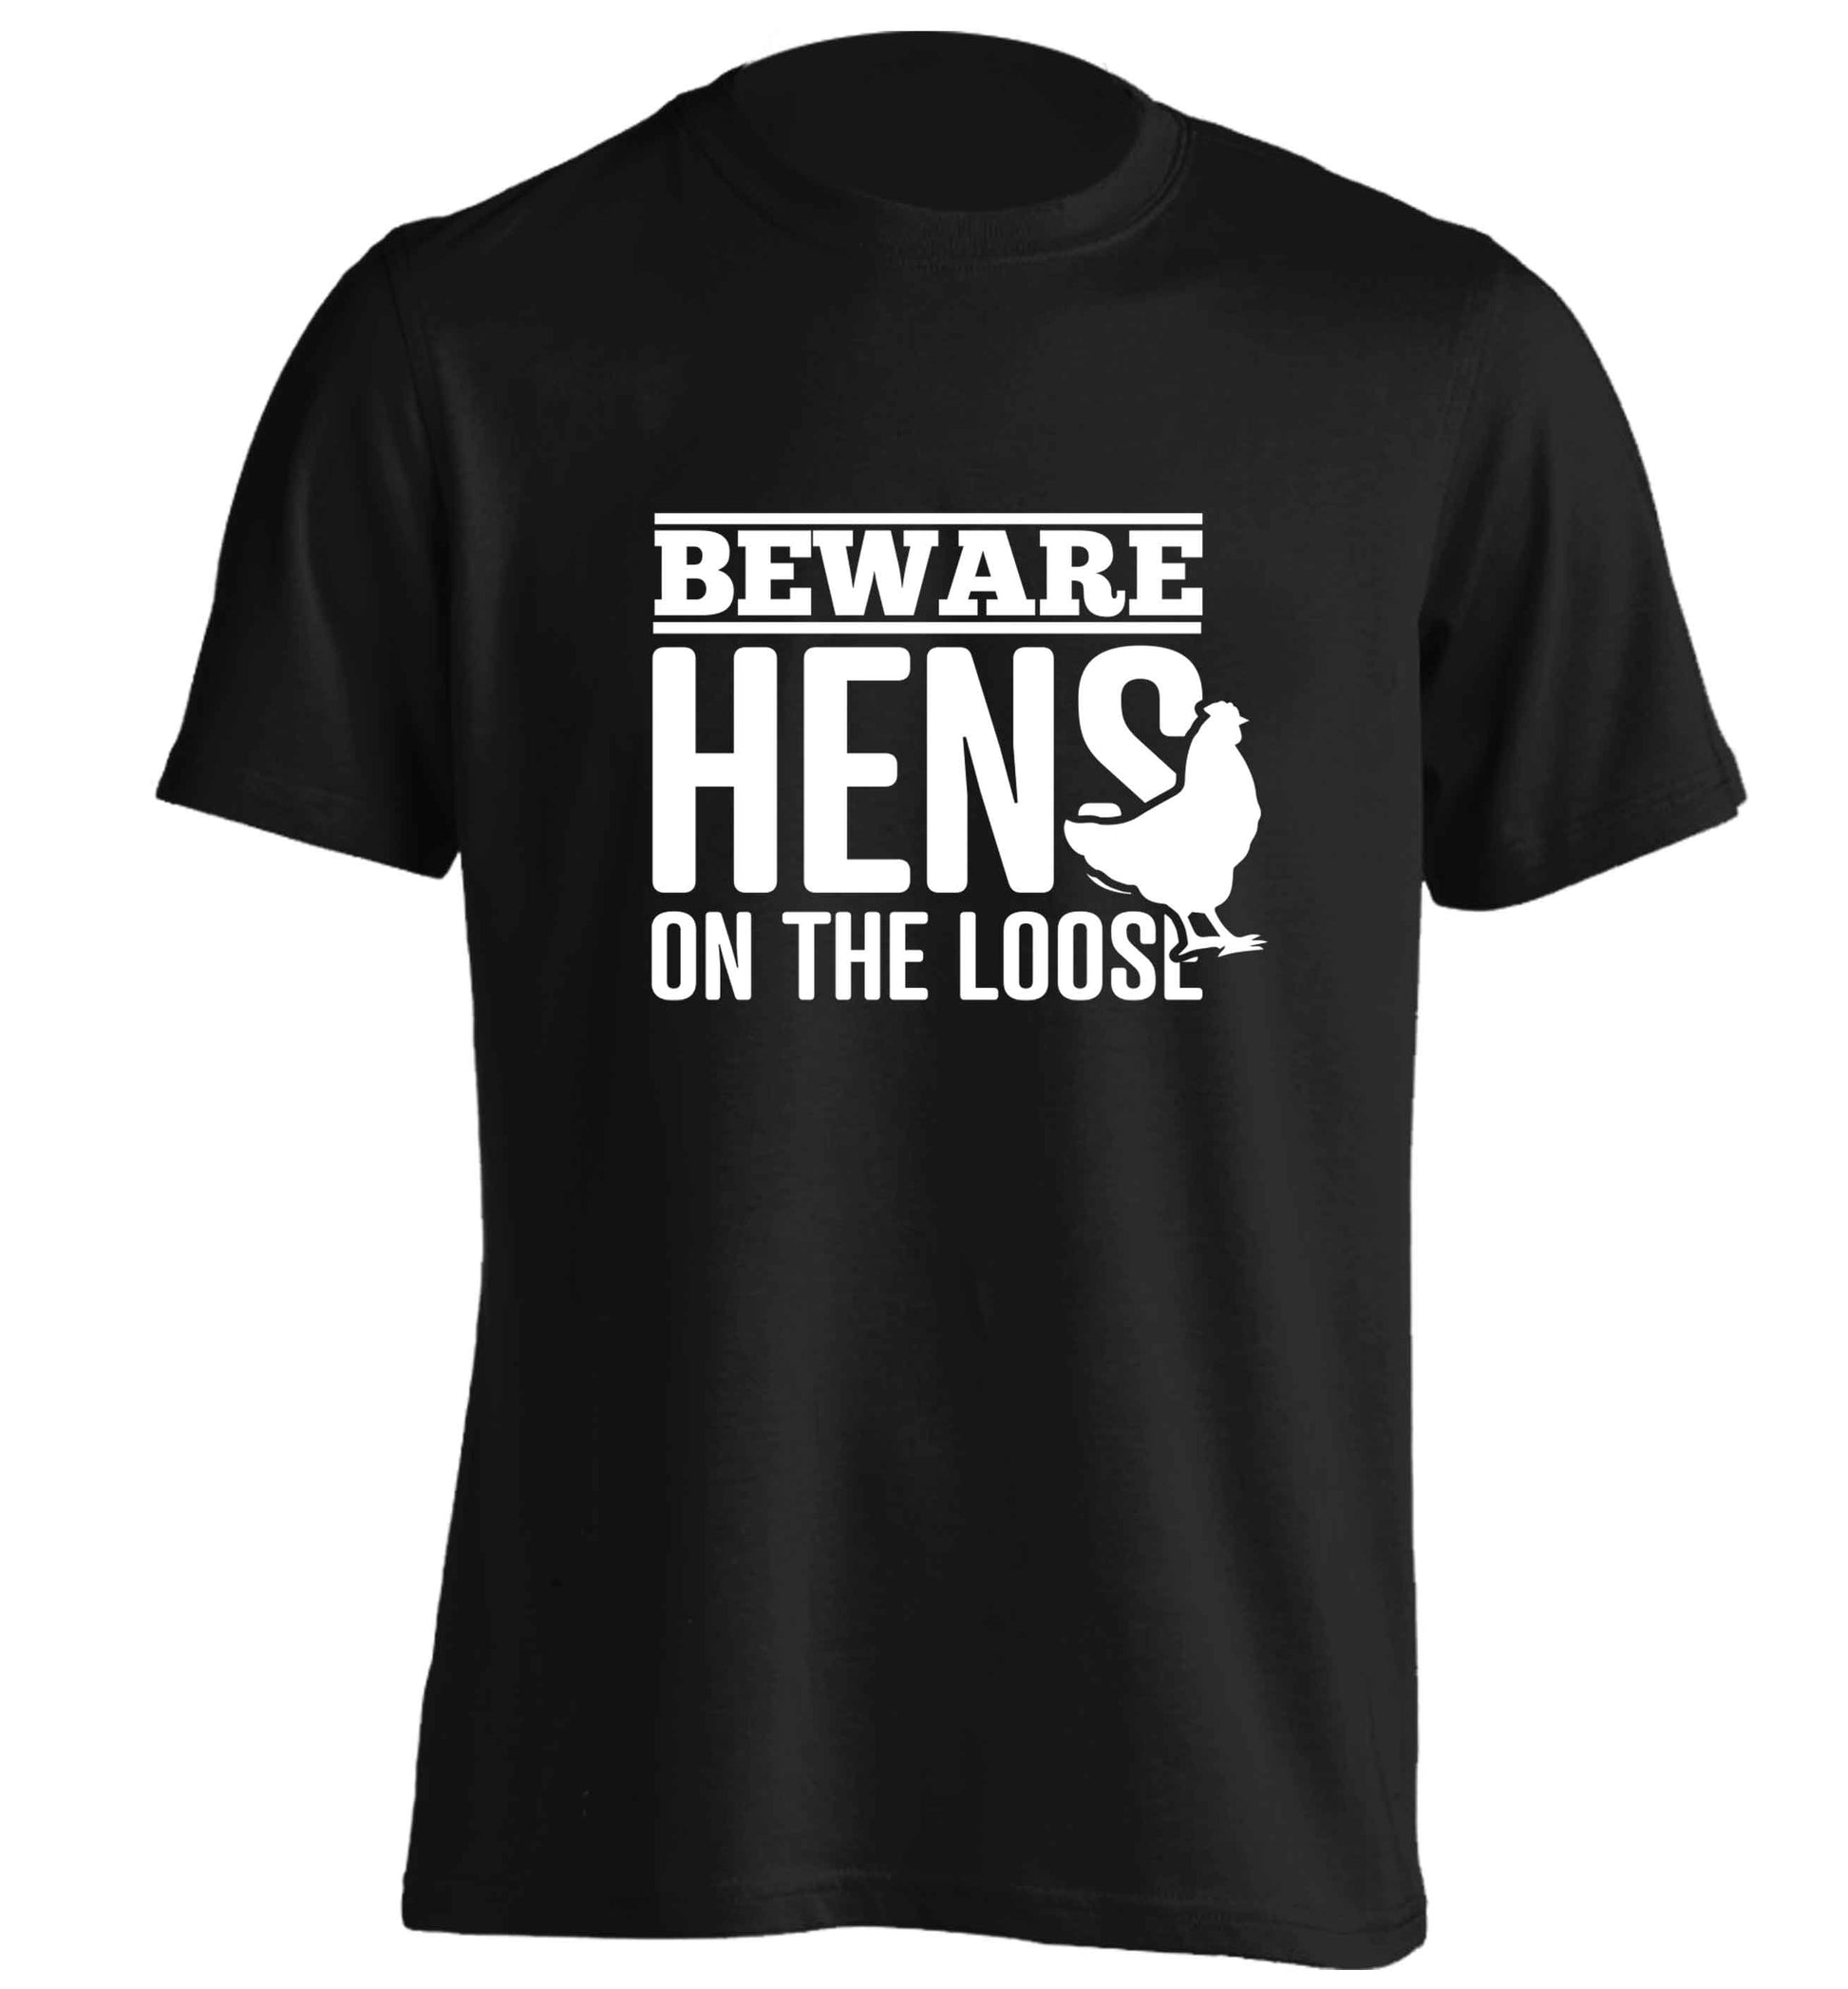 Beware hens on the loose adults unisex black Tshirt 2XL